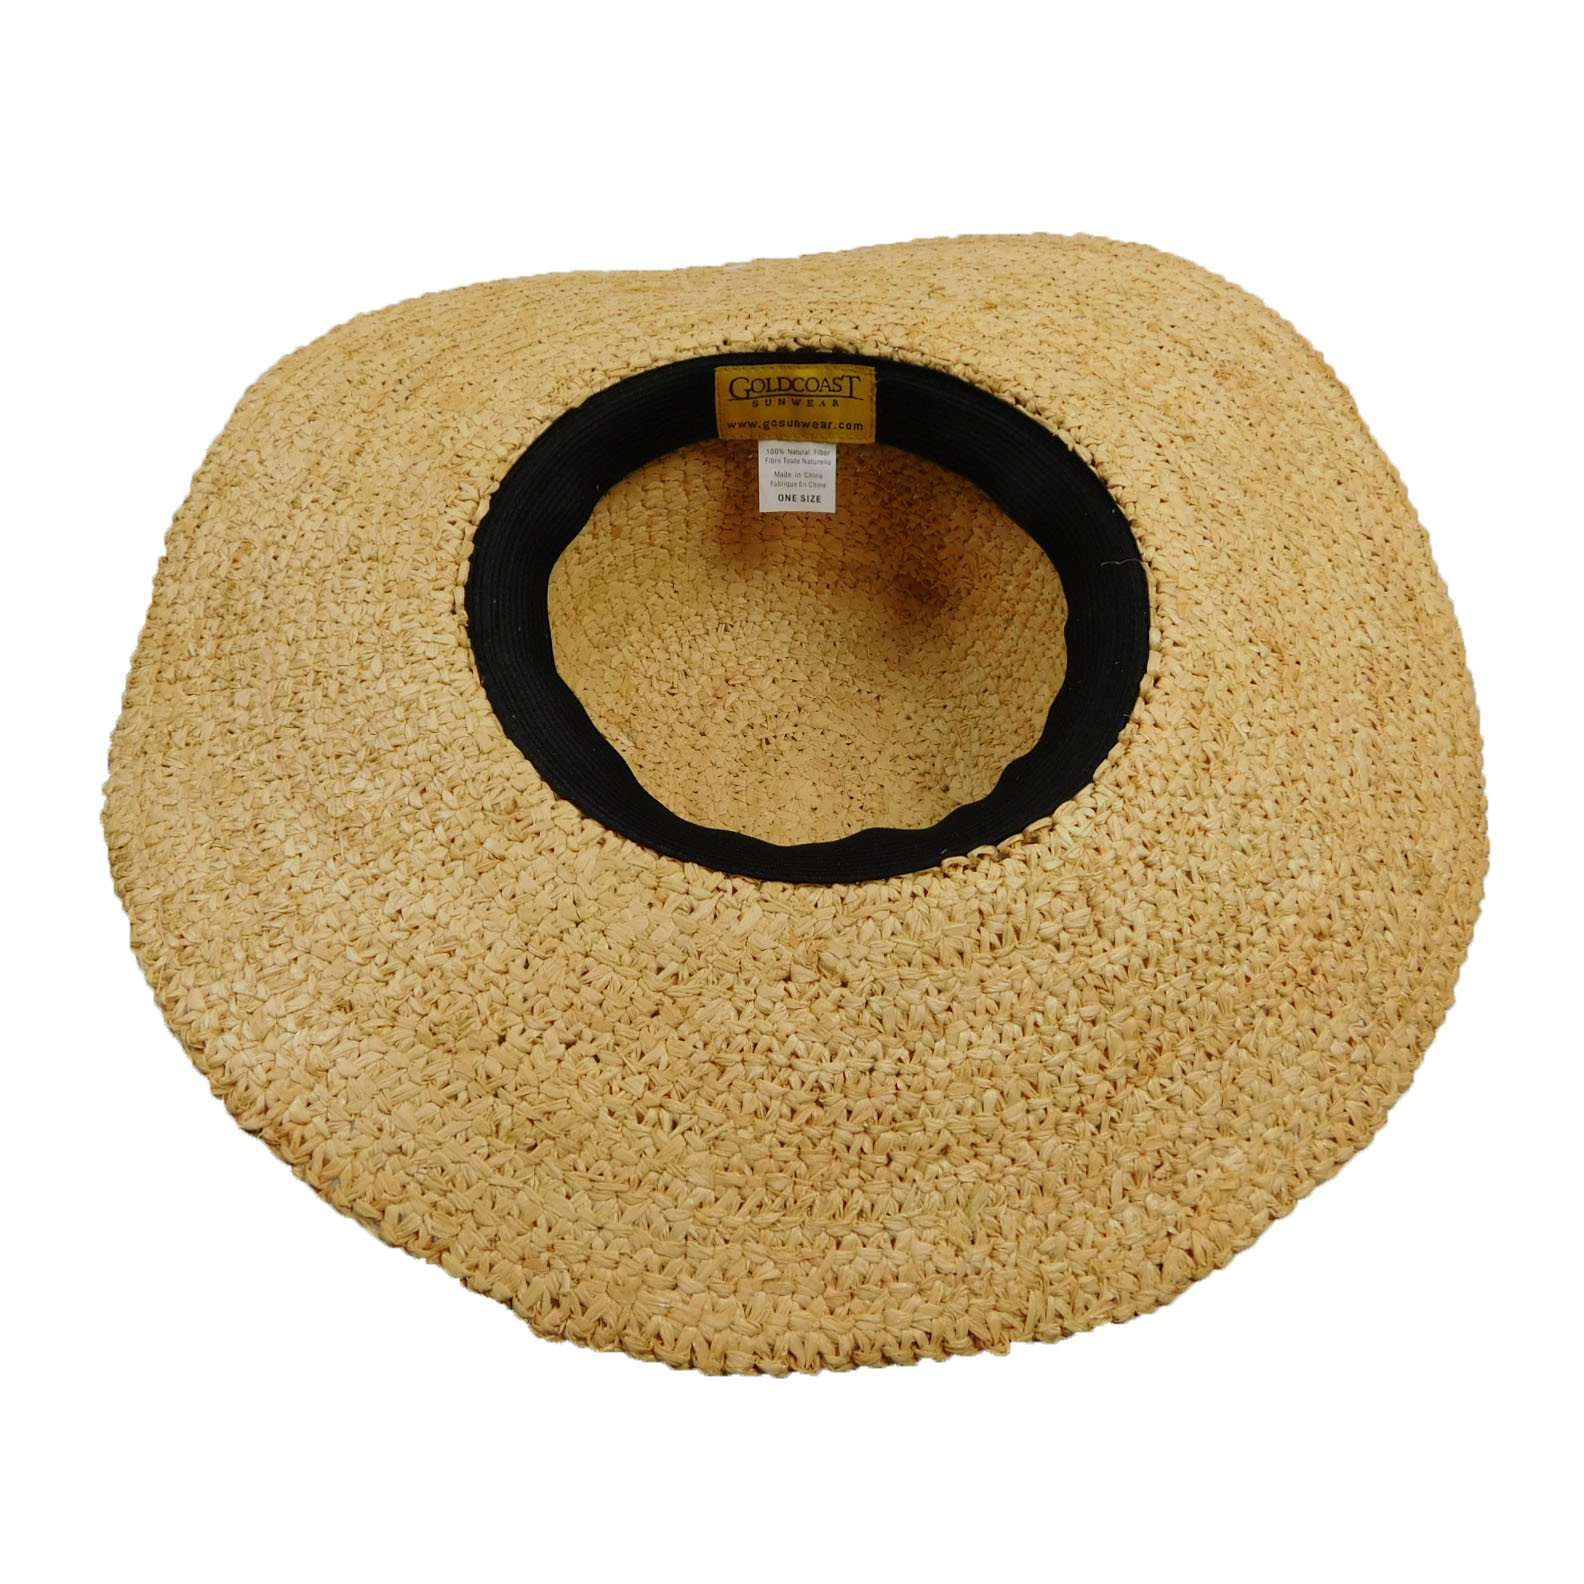 Paris Crochet Raffia Summer Hat by Peter Grimm - Brown, Floppy Hat - SetarTrading Hats 